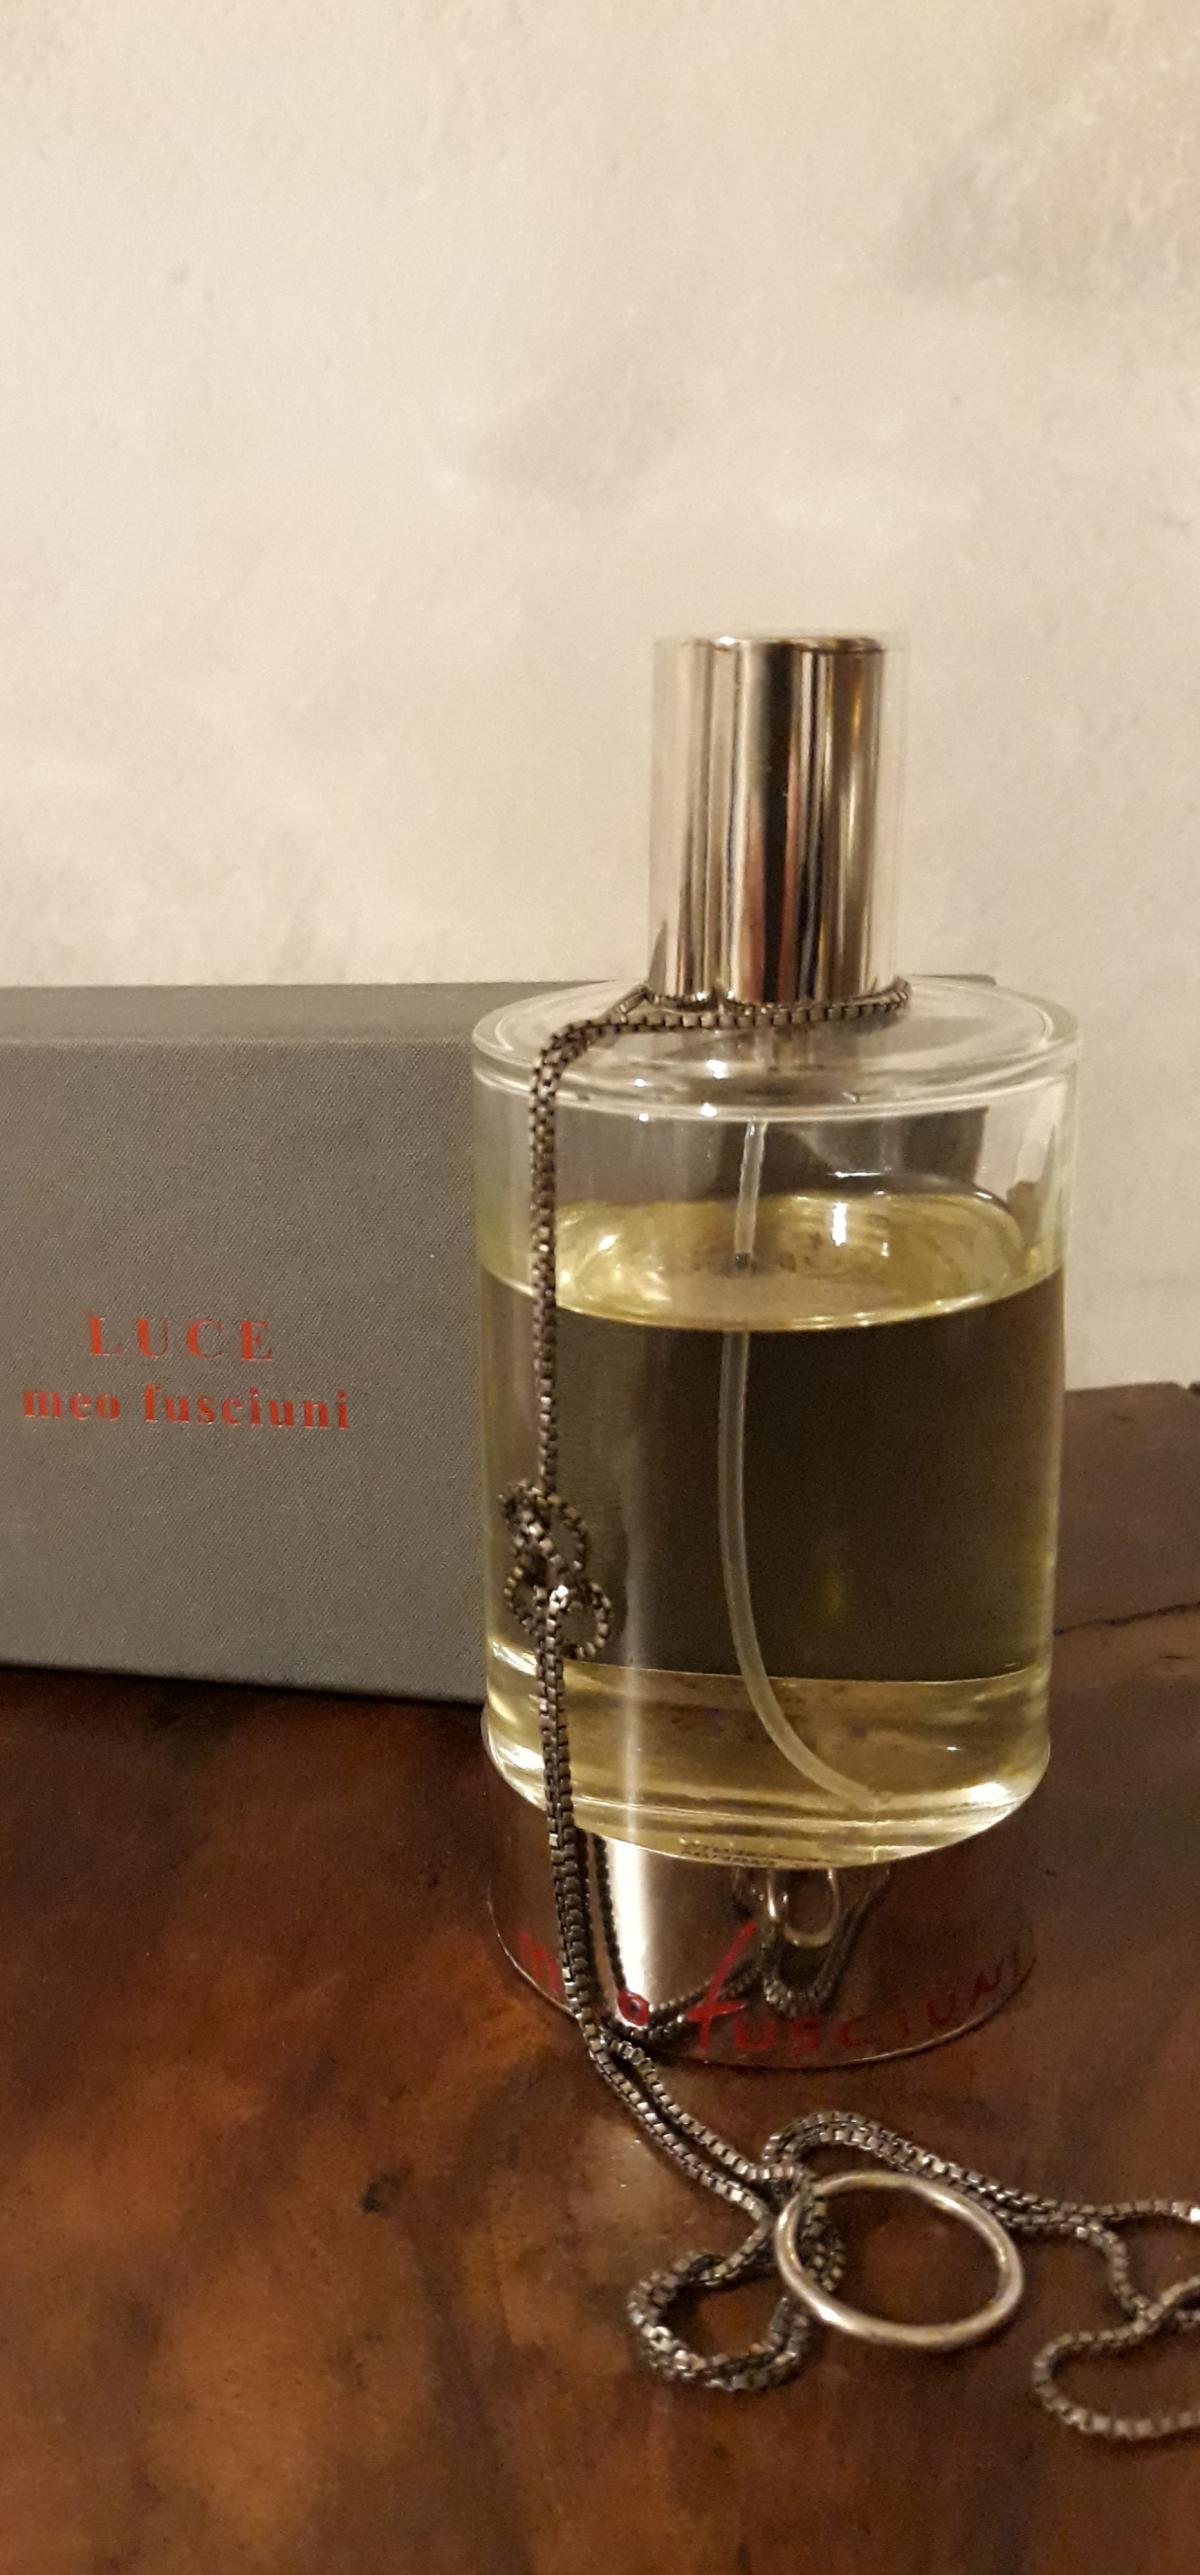 Luce Meo Fusciuni perfume - a fragrance for women and men 2013